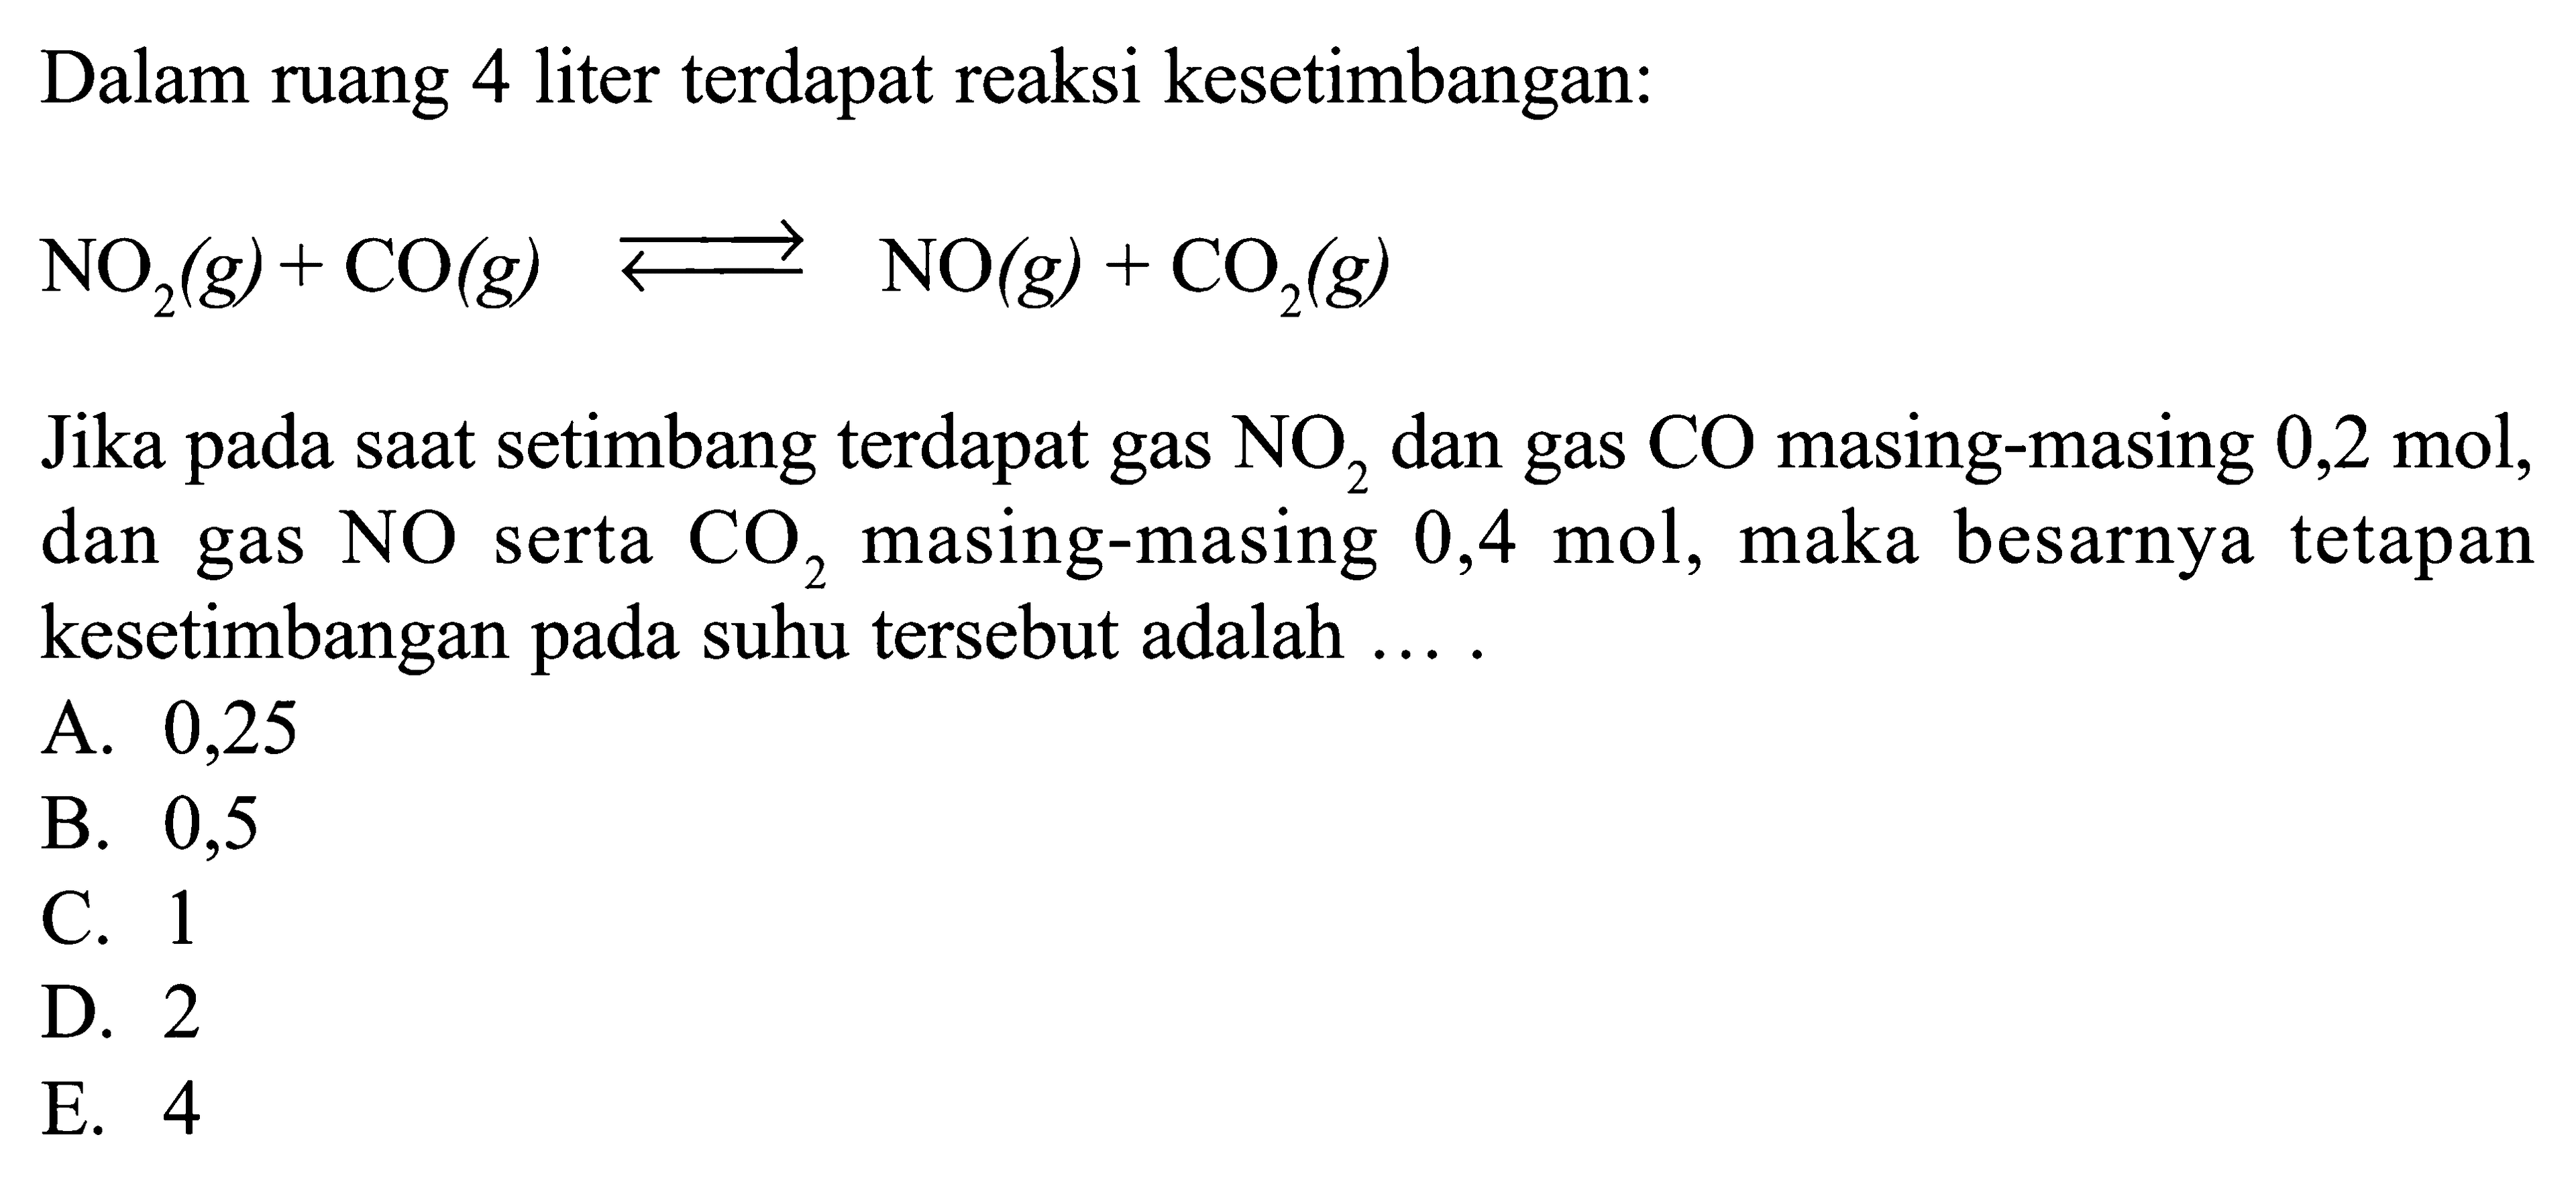 Dalam ruang 4 liter terdapat reaksi kesetimbangan:NO2(g)+CO(g) <-NO(g)+CO2(g)Jika pada saat setimbang terdapat gas  NO2  dan gas  CO  masing-masing  0,2 mol , dan gas  NO  serta  CO2  masing-masing  0,4 mol , maka besarnya tetapan kesetimbangan pada suhu tersebut adalah ....